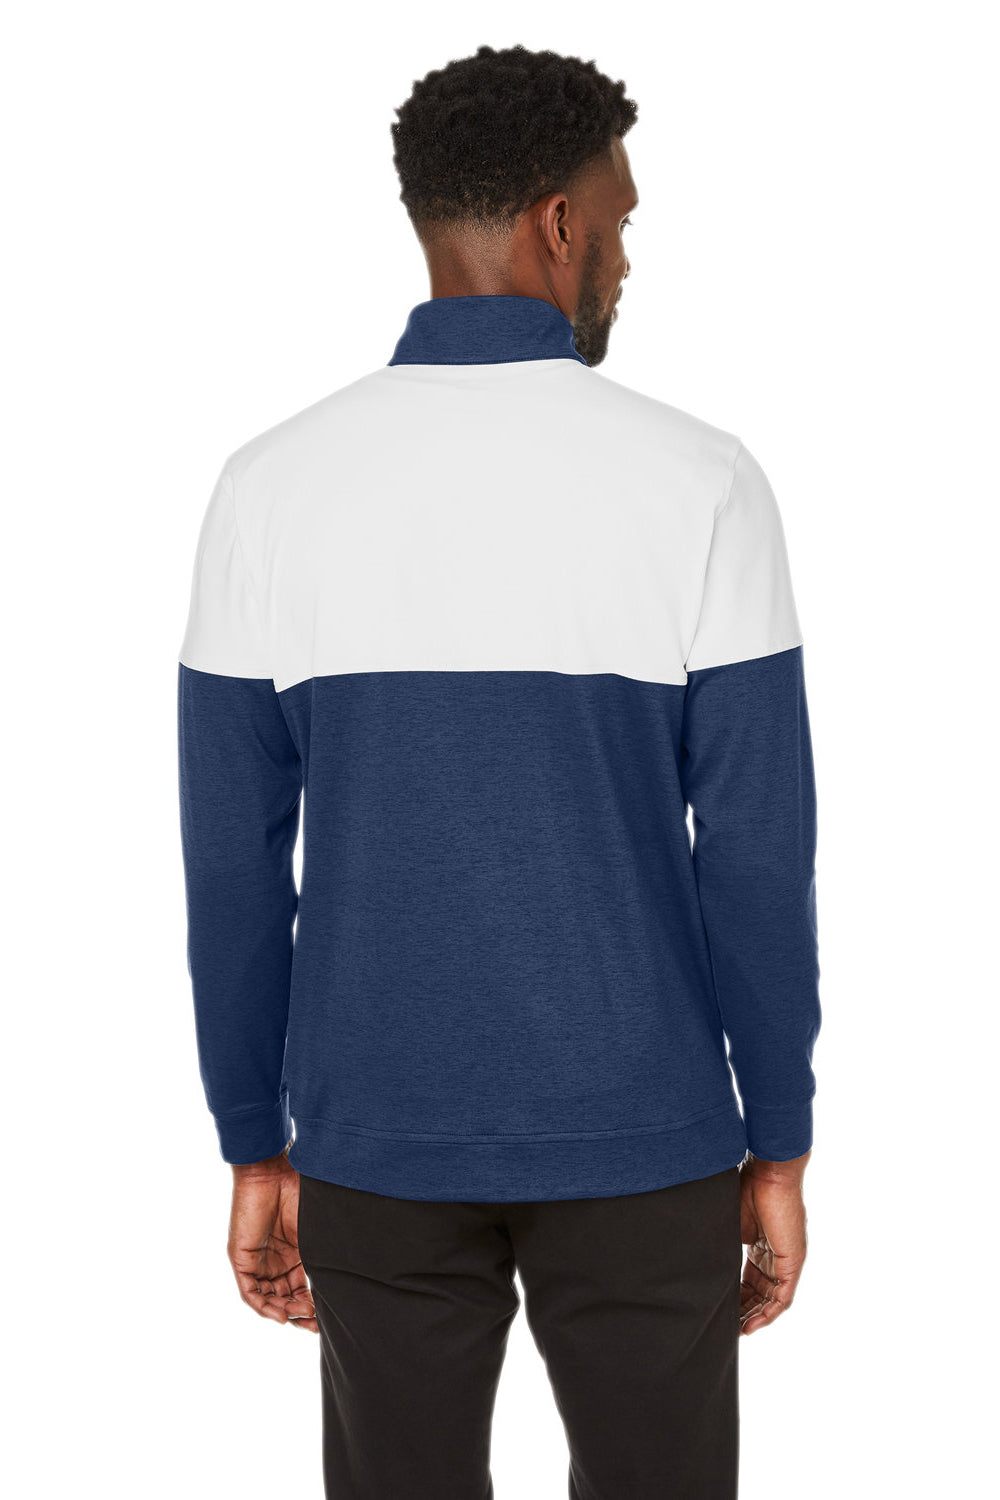 Puma 595803 Mens Cloudspun Warm Up 1/4 Zip Sweatshirt Peacoat Blue/White Back